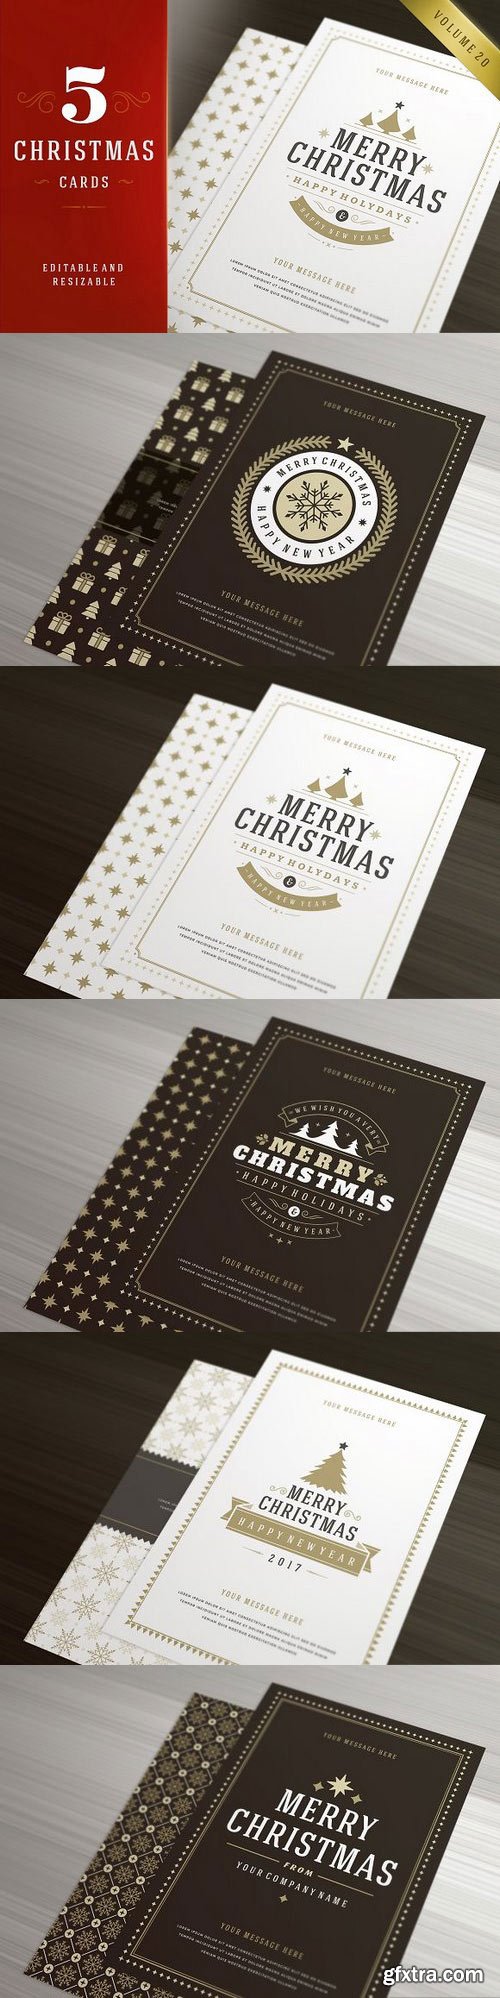 CM - Christmas Greeting cards 1025989